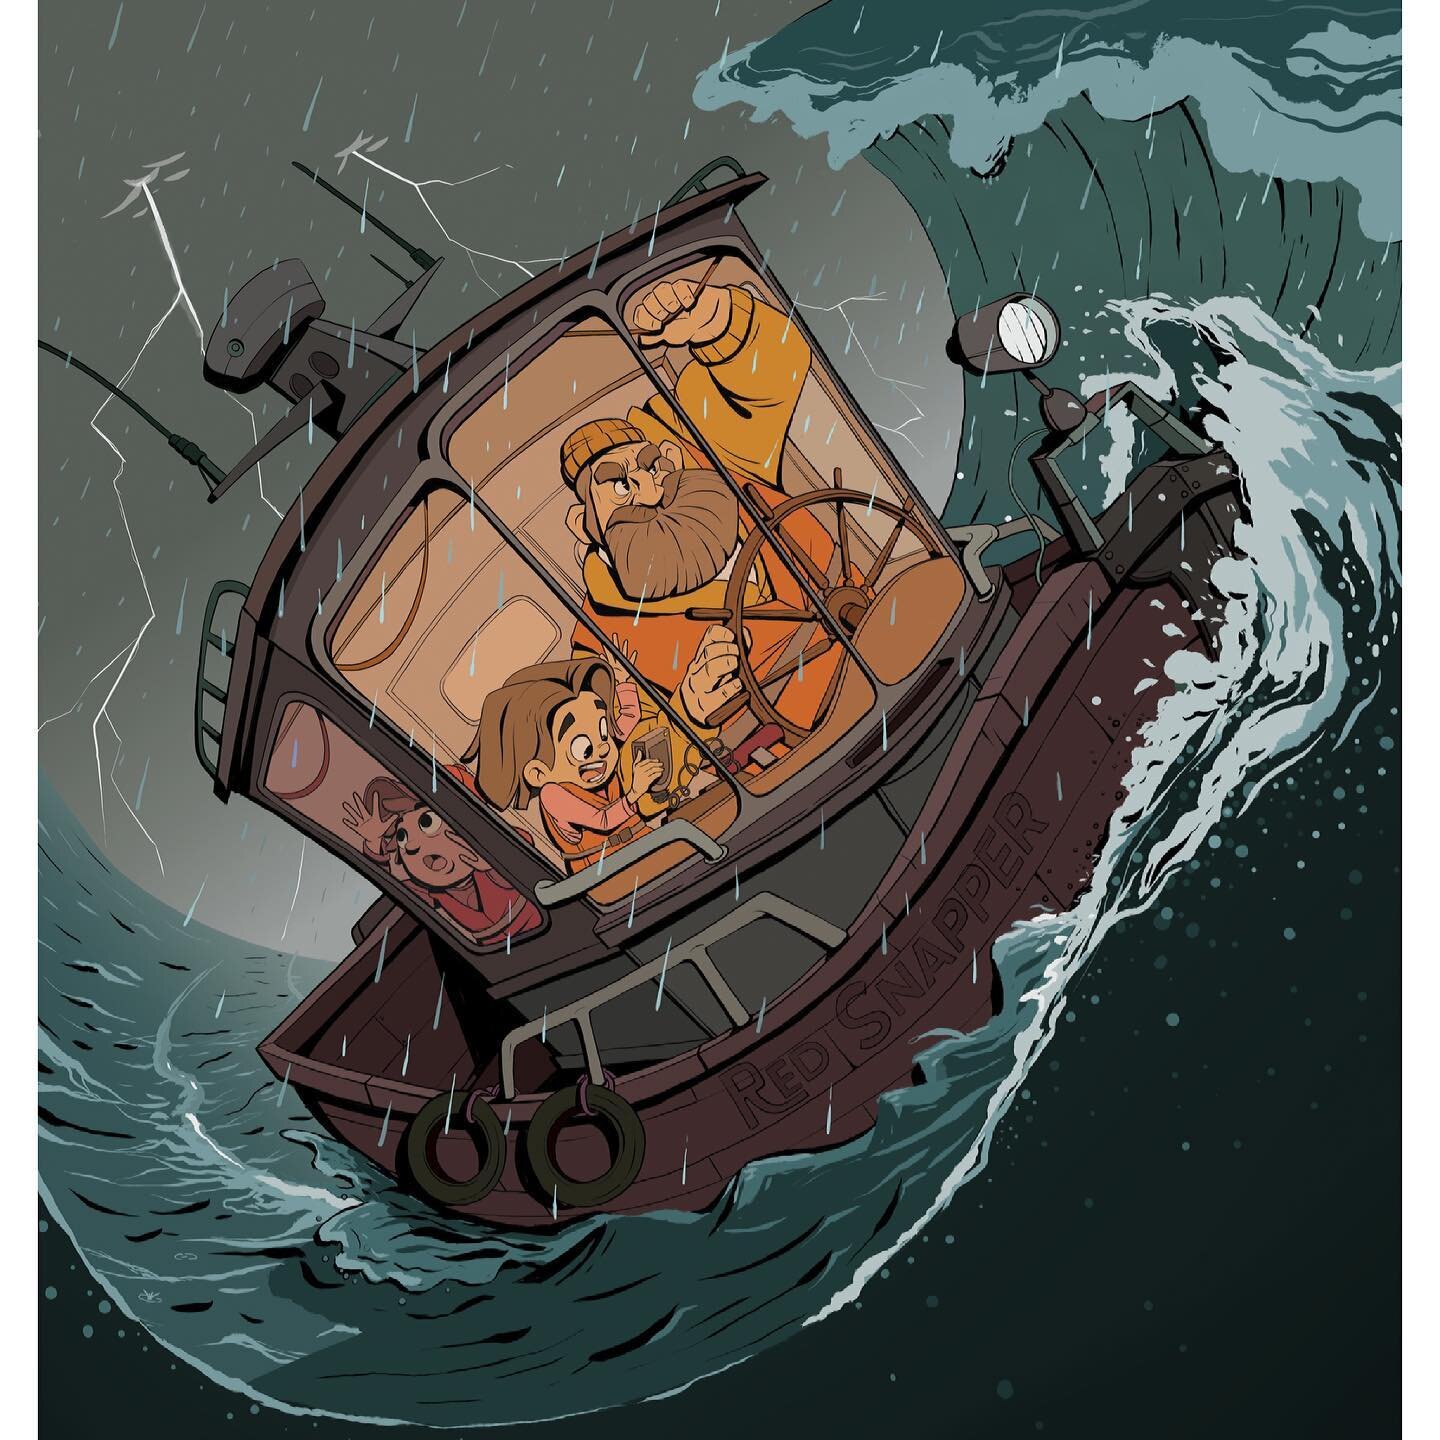 &ldquo;The Unsinkable Red Snapper&rdquo; 
An illustration for a McGraw Hill short story, &ldquo;Lost at Sea.&rdquo;
.
.
.
.
.
#illustration #illustrationartists #stormyseas #boat #ship #tidalwave #kidslitart #illustrator #storybookillustration #digit